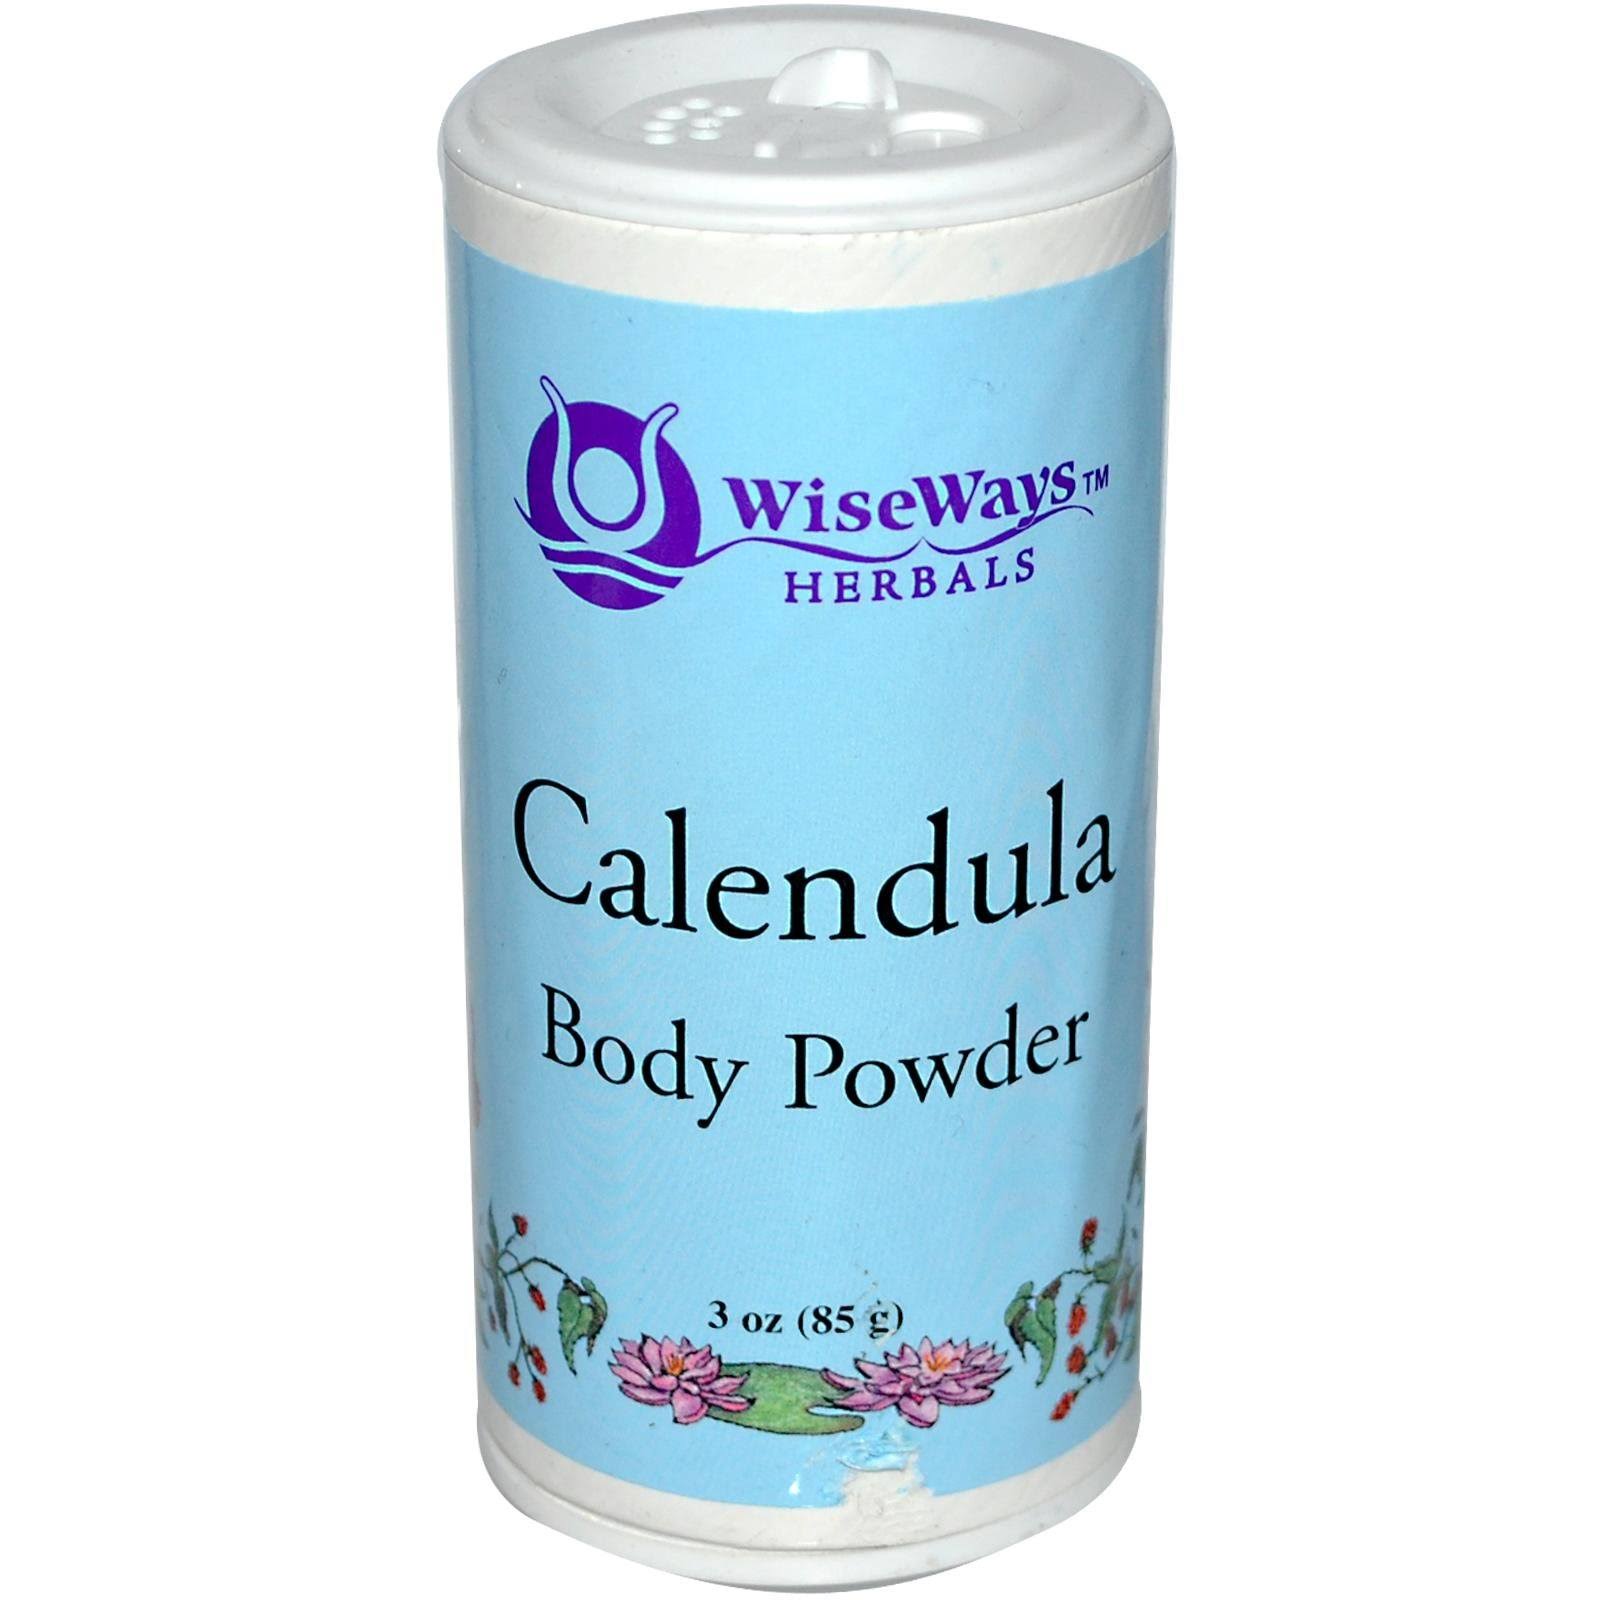 WiseWays Herbals Calendula Body Powder - 3oz